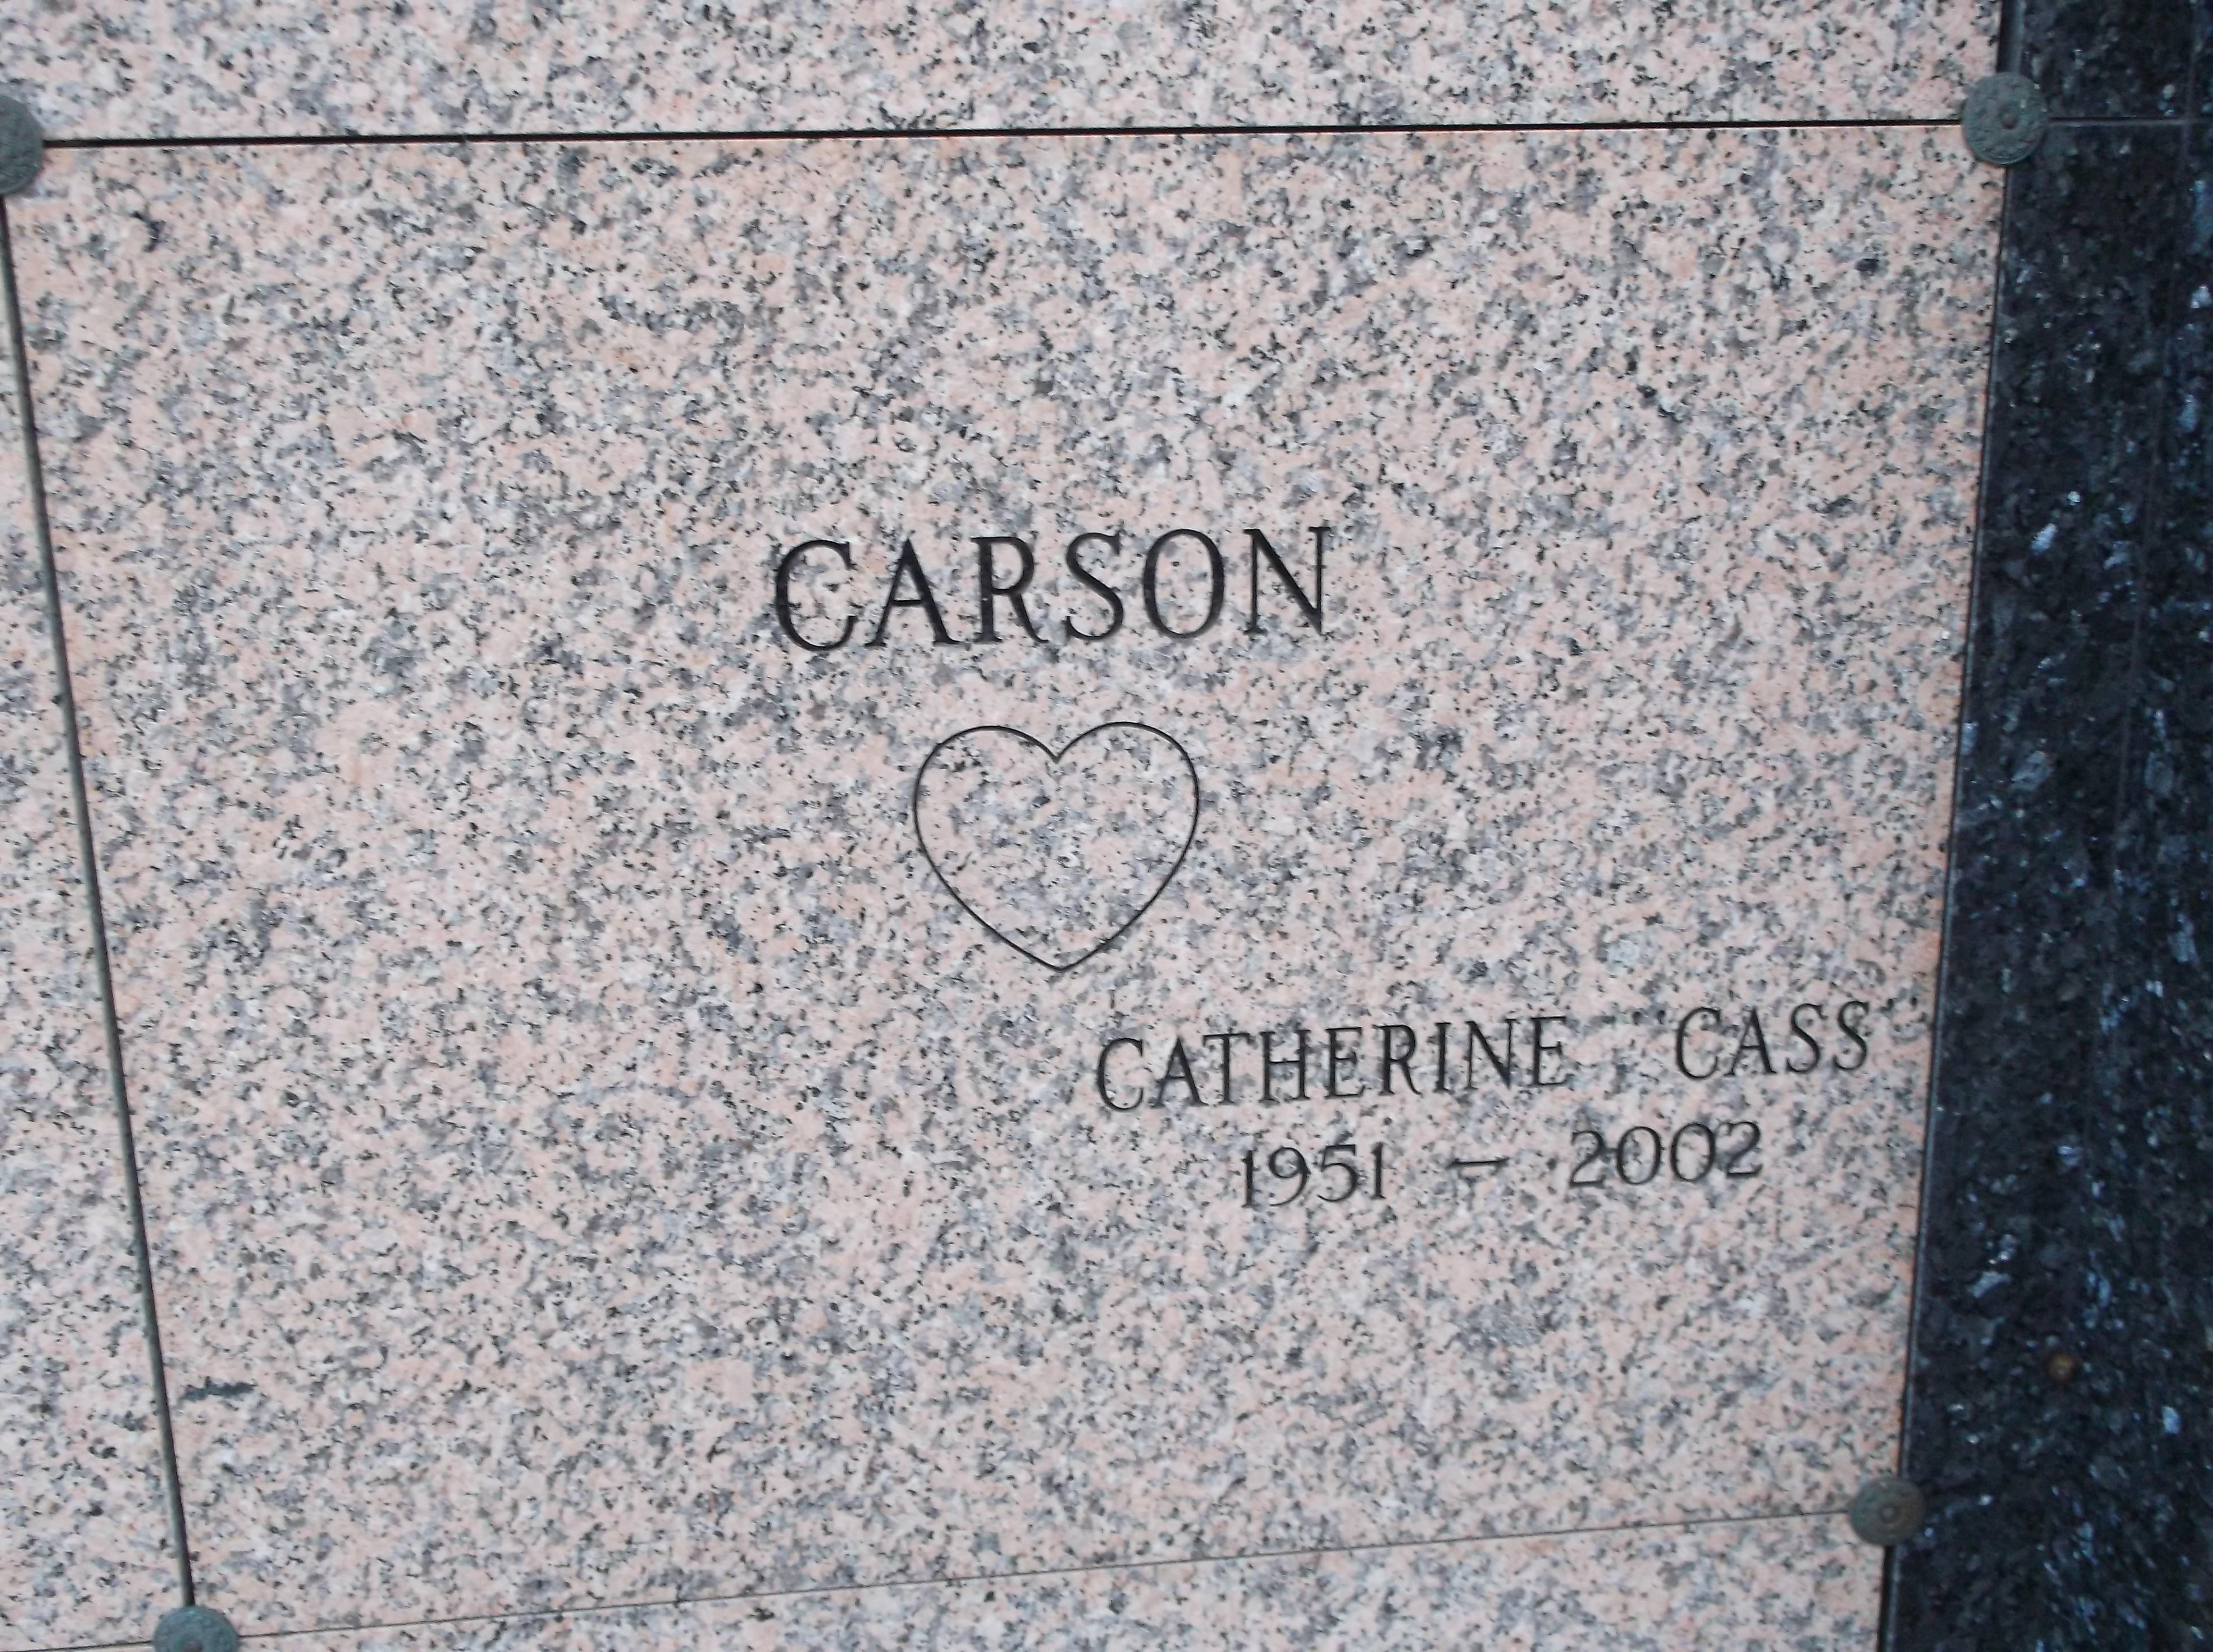 Catherine "Cass" Carson